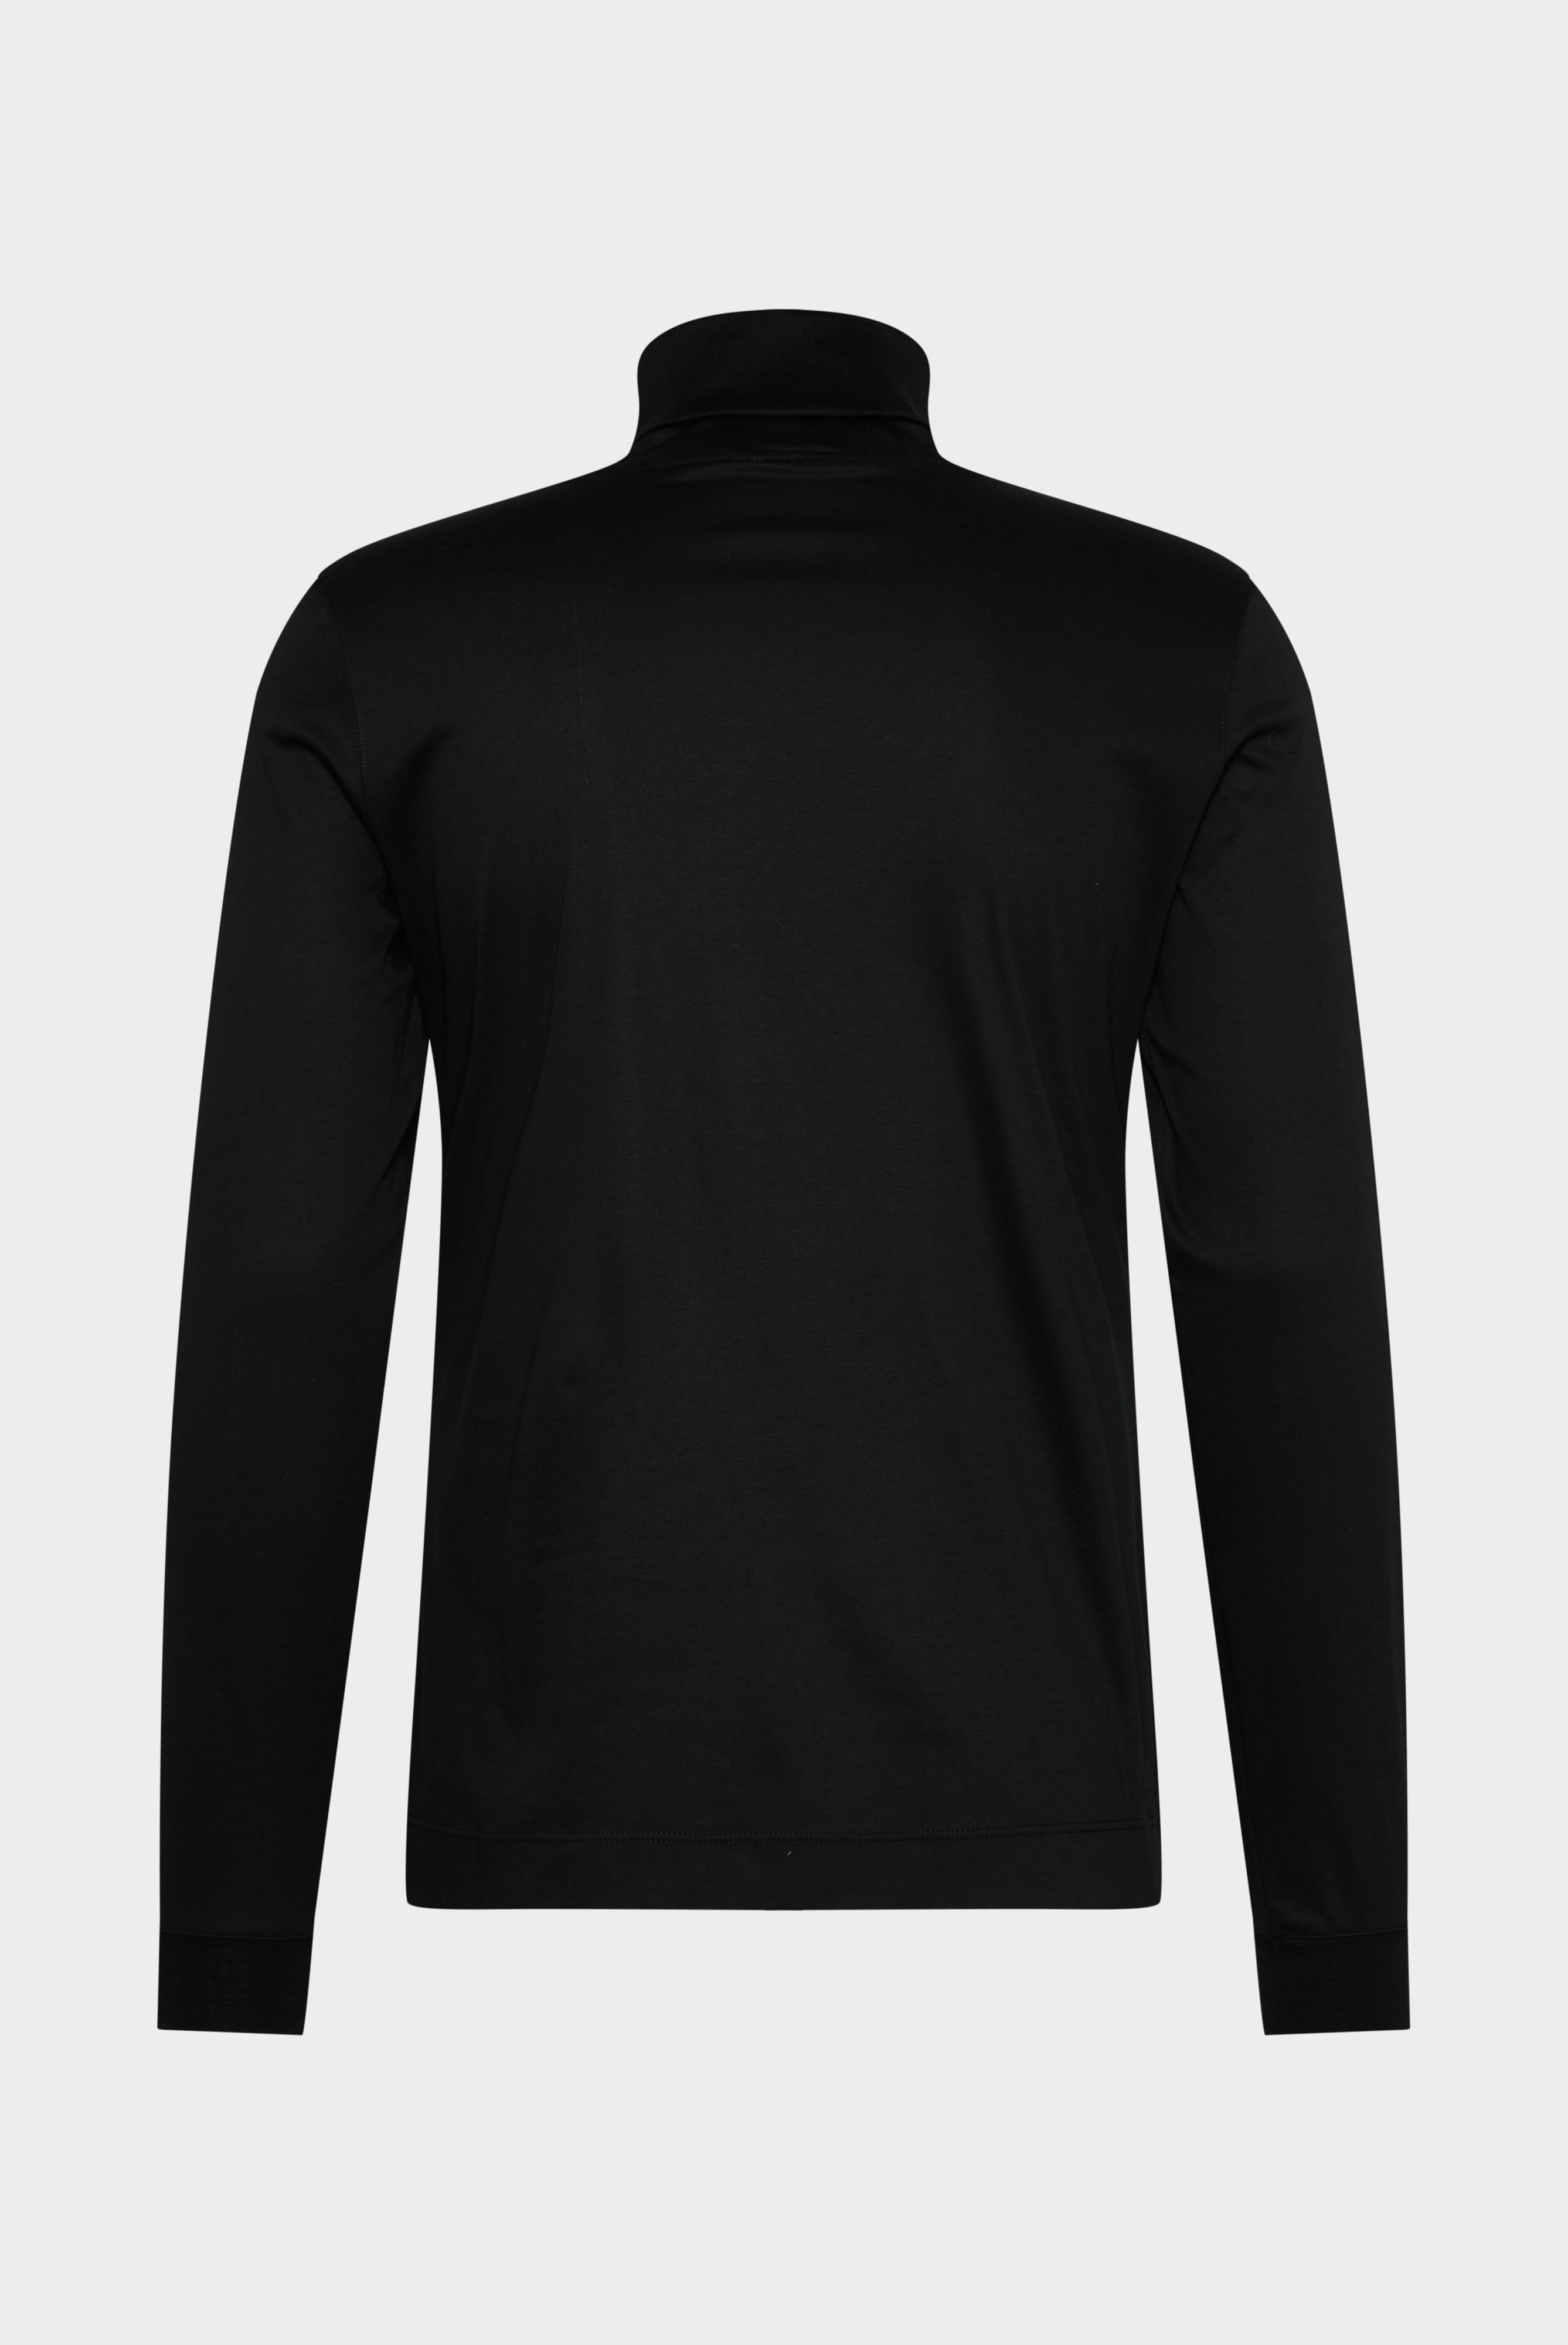 T-Shirts+Swiss Cotton Jersey Turtleneck Shirt+20.1719.UX.180031.099.S